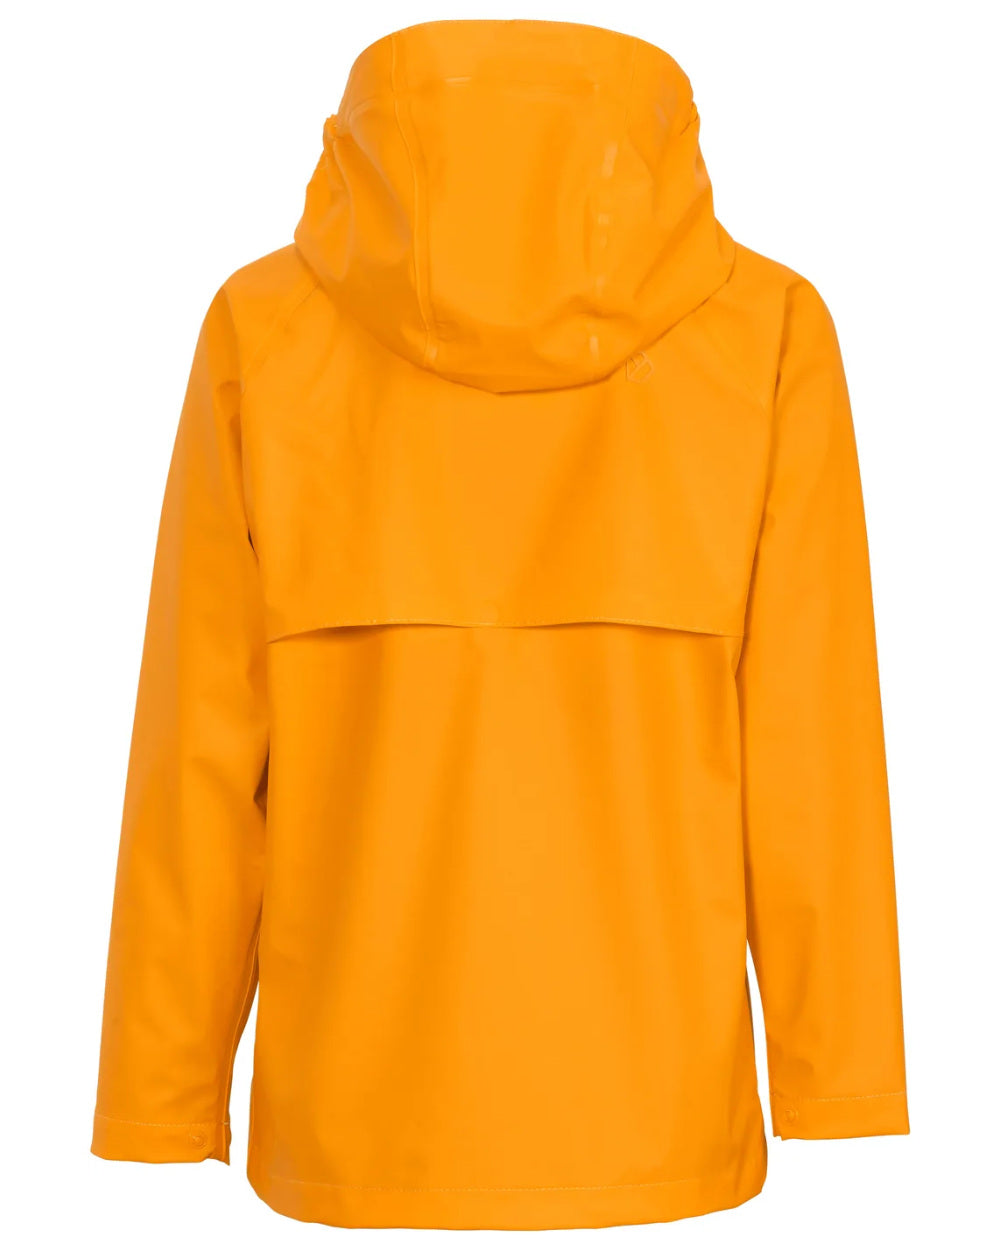 Saffron Yellow Coloured Didriksons Avon Youth Jacket Galon On A White Background 